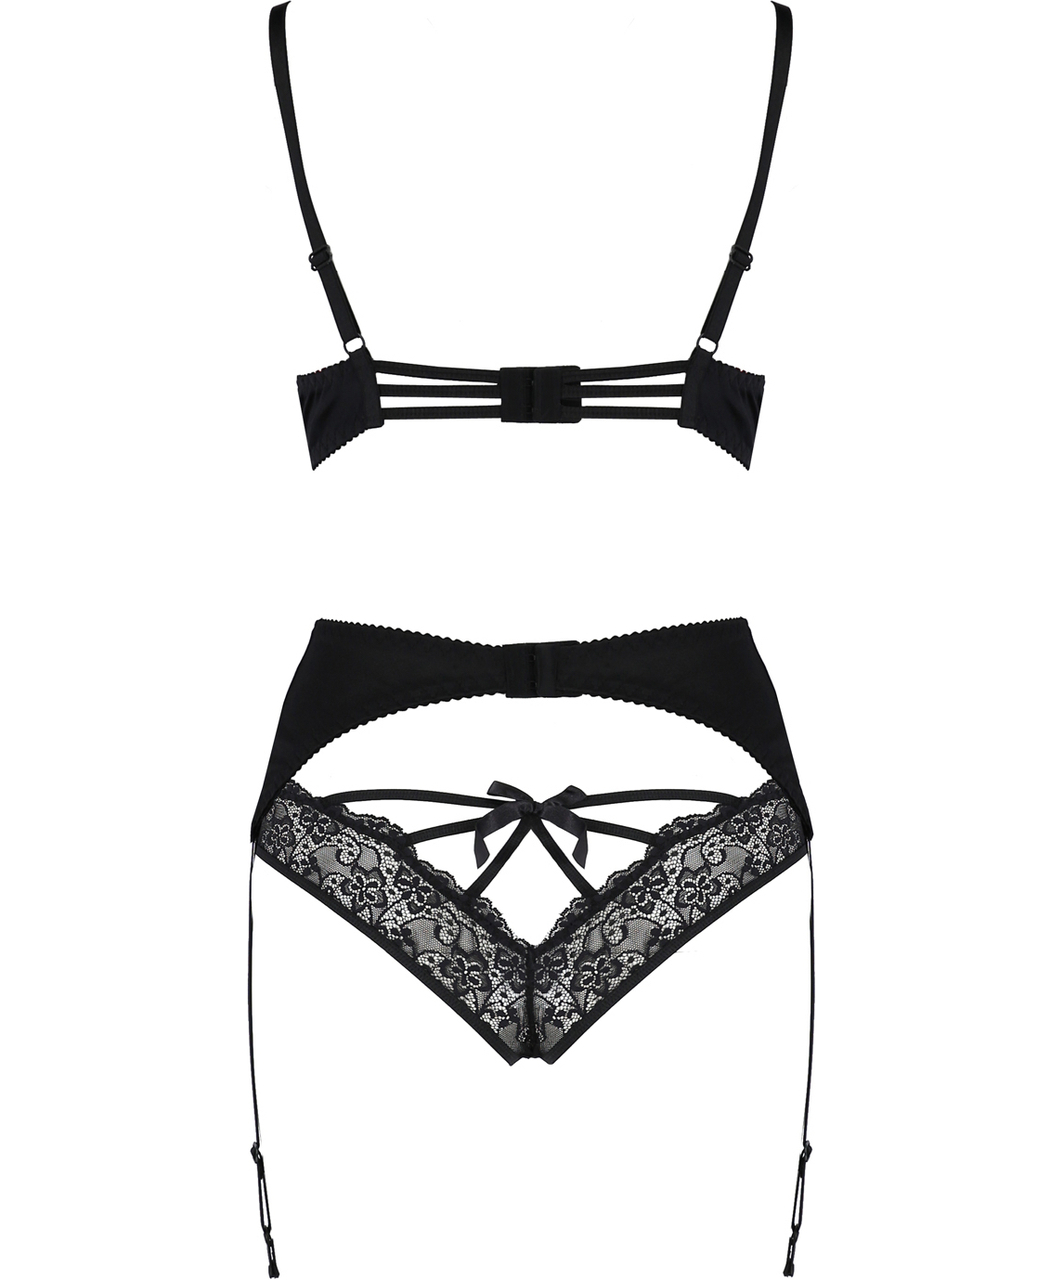 Avanua Aya black lace suspender lingerie set